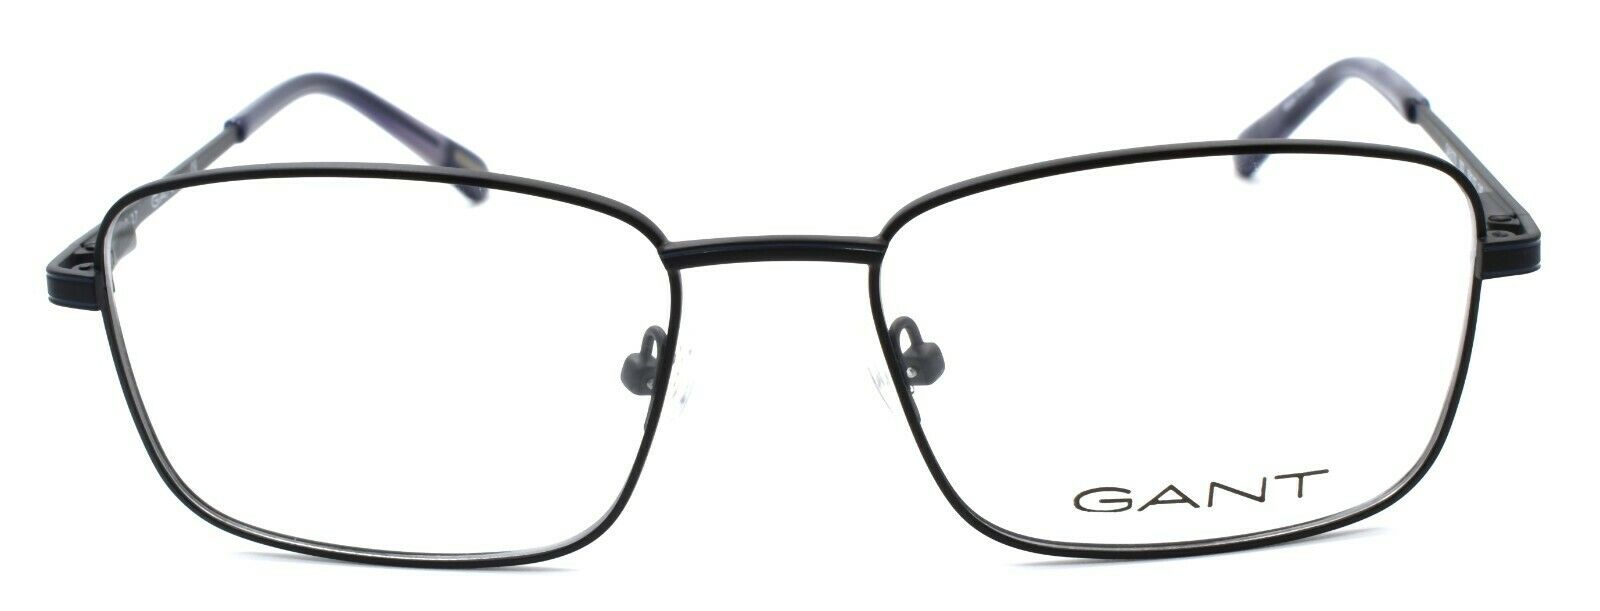 2-GANT GA3170 002 Men's Eyeglasses Frames 53-17-140 Satin Black-664689952106-IKSpecs